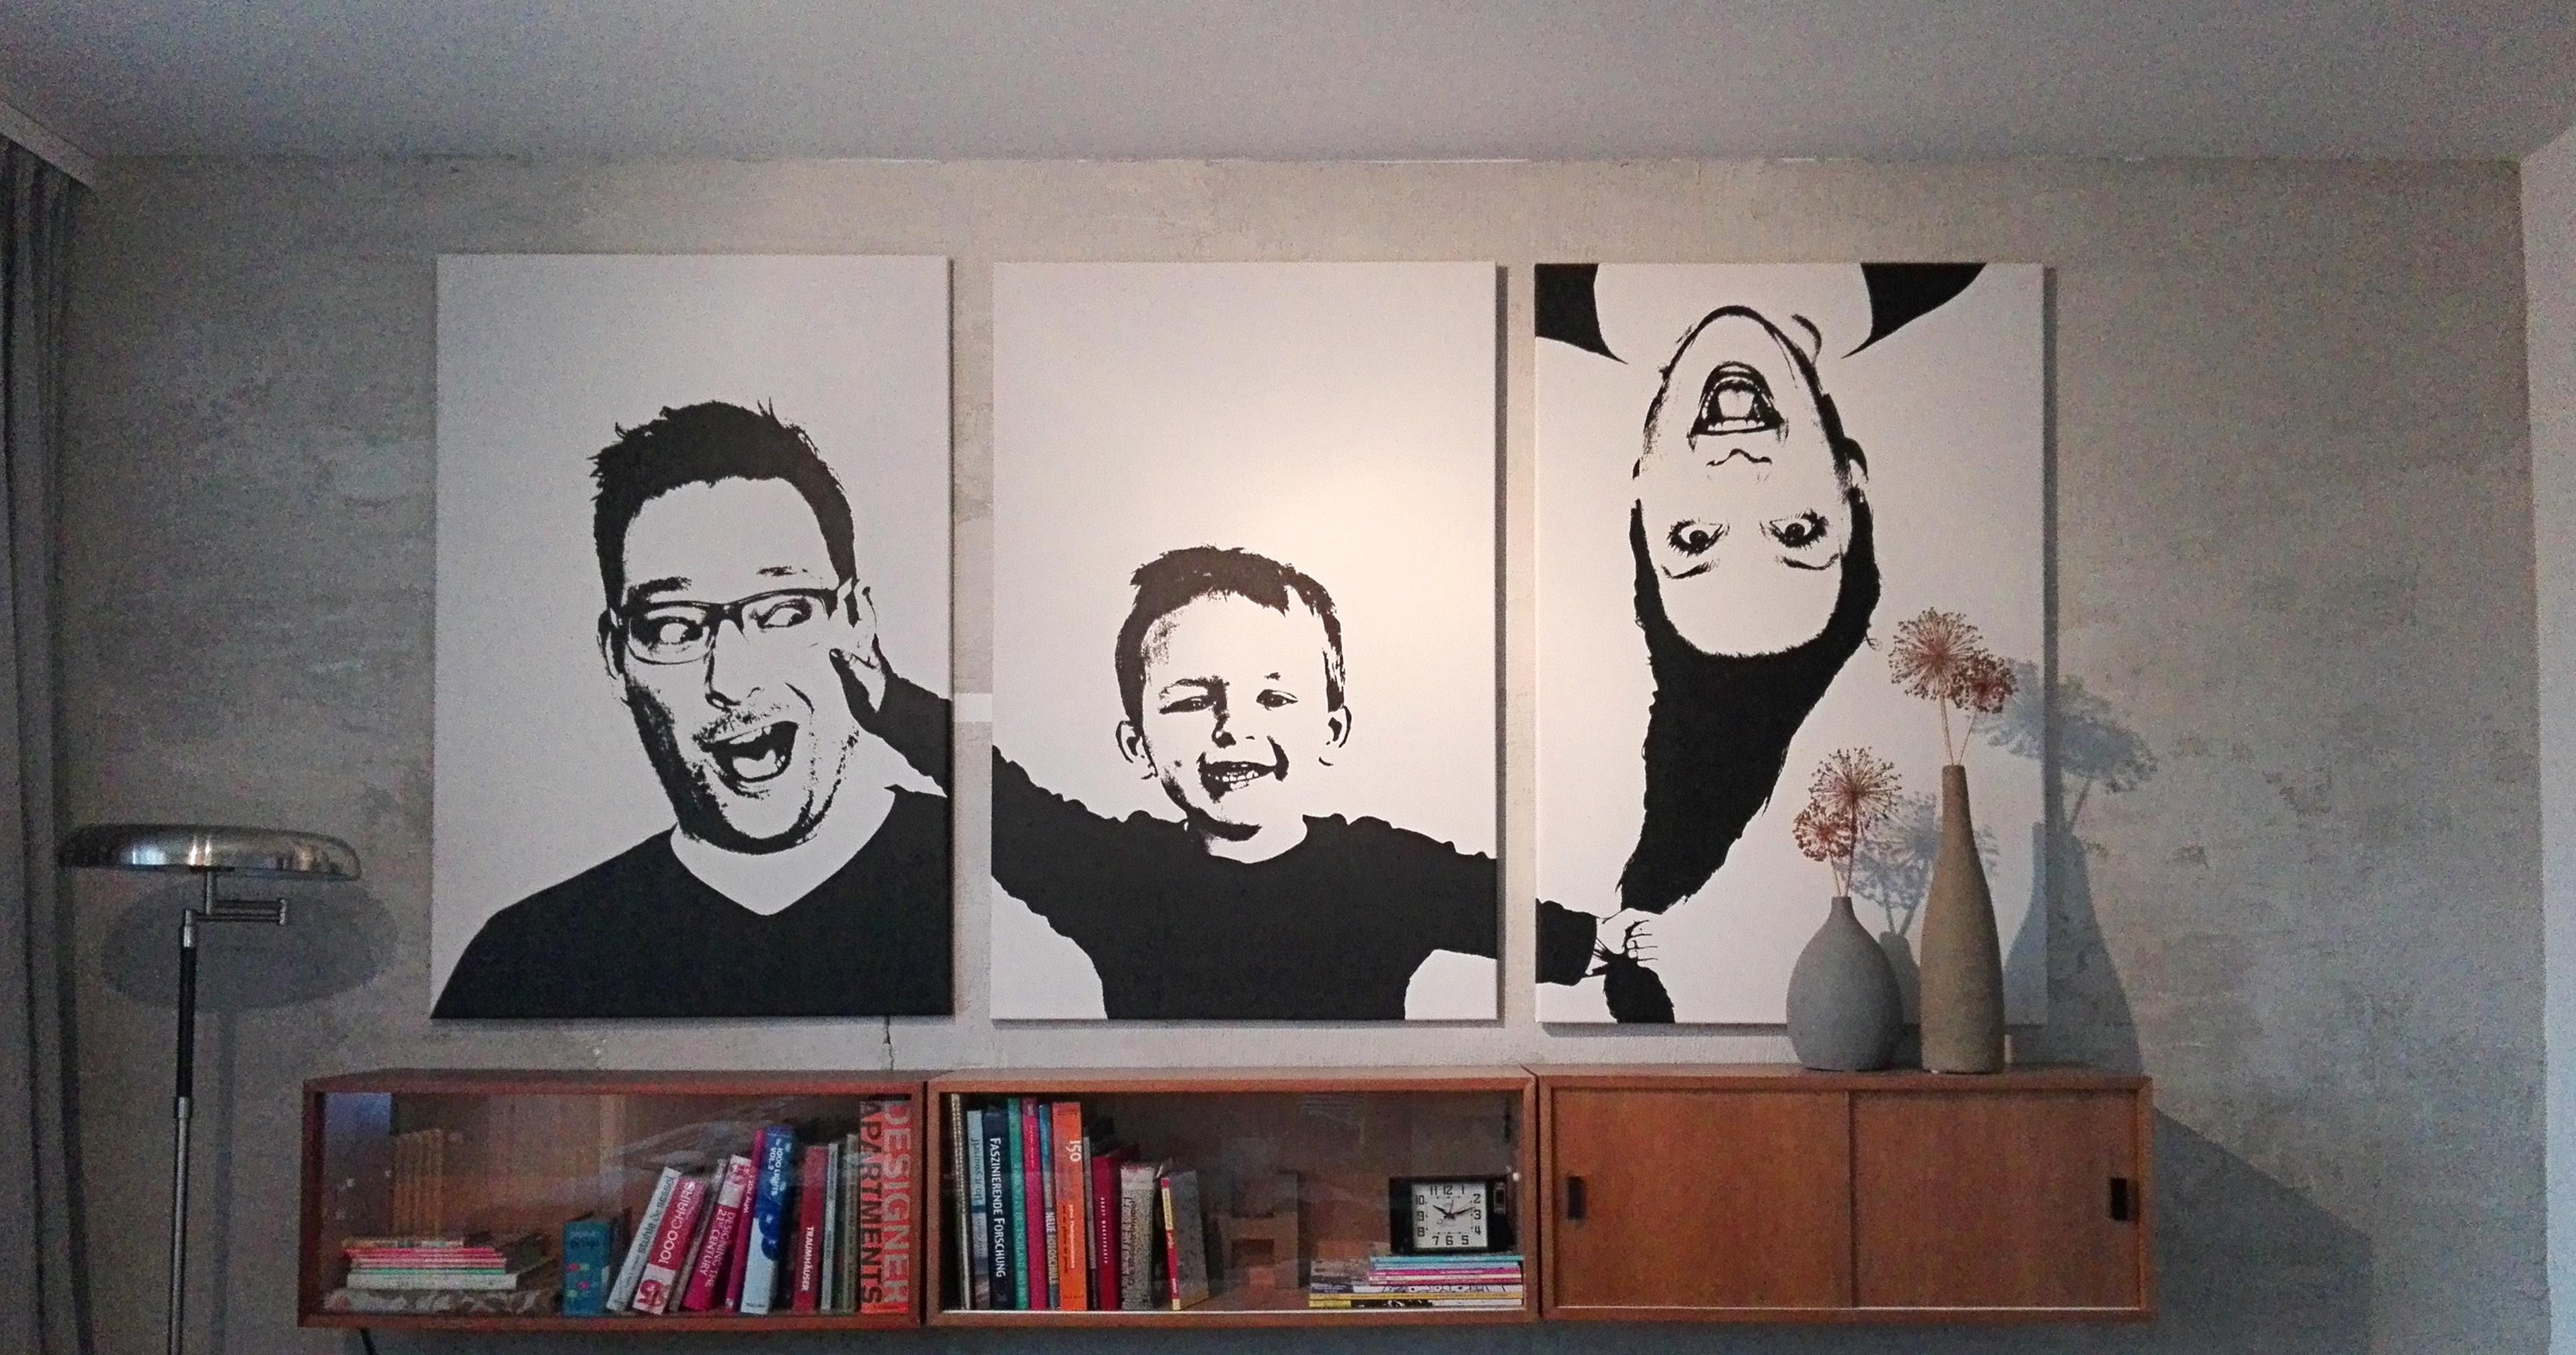 Familienfoto mal anders...
#Familienfoto #Wandgestaltung #Bilderwand #Bildergalerie #Betonwand #Leinwand #Familie